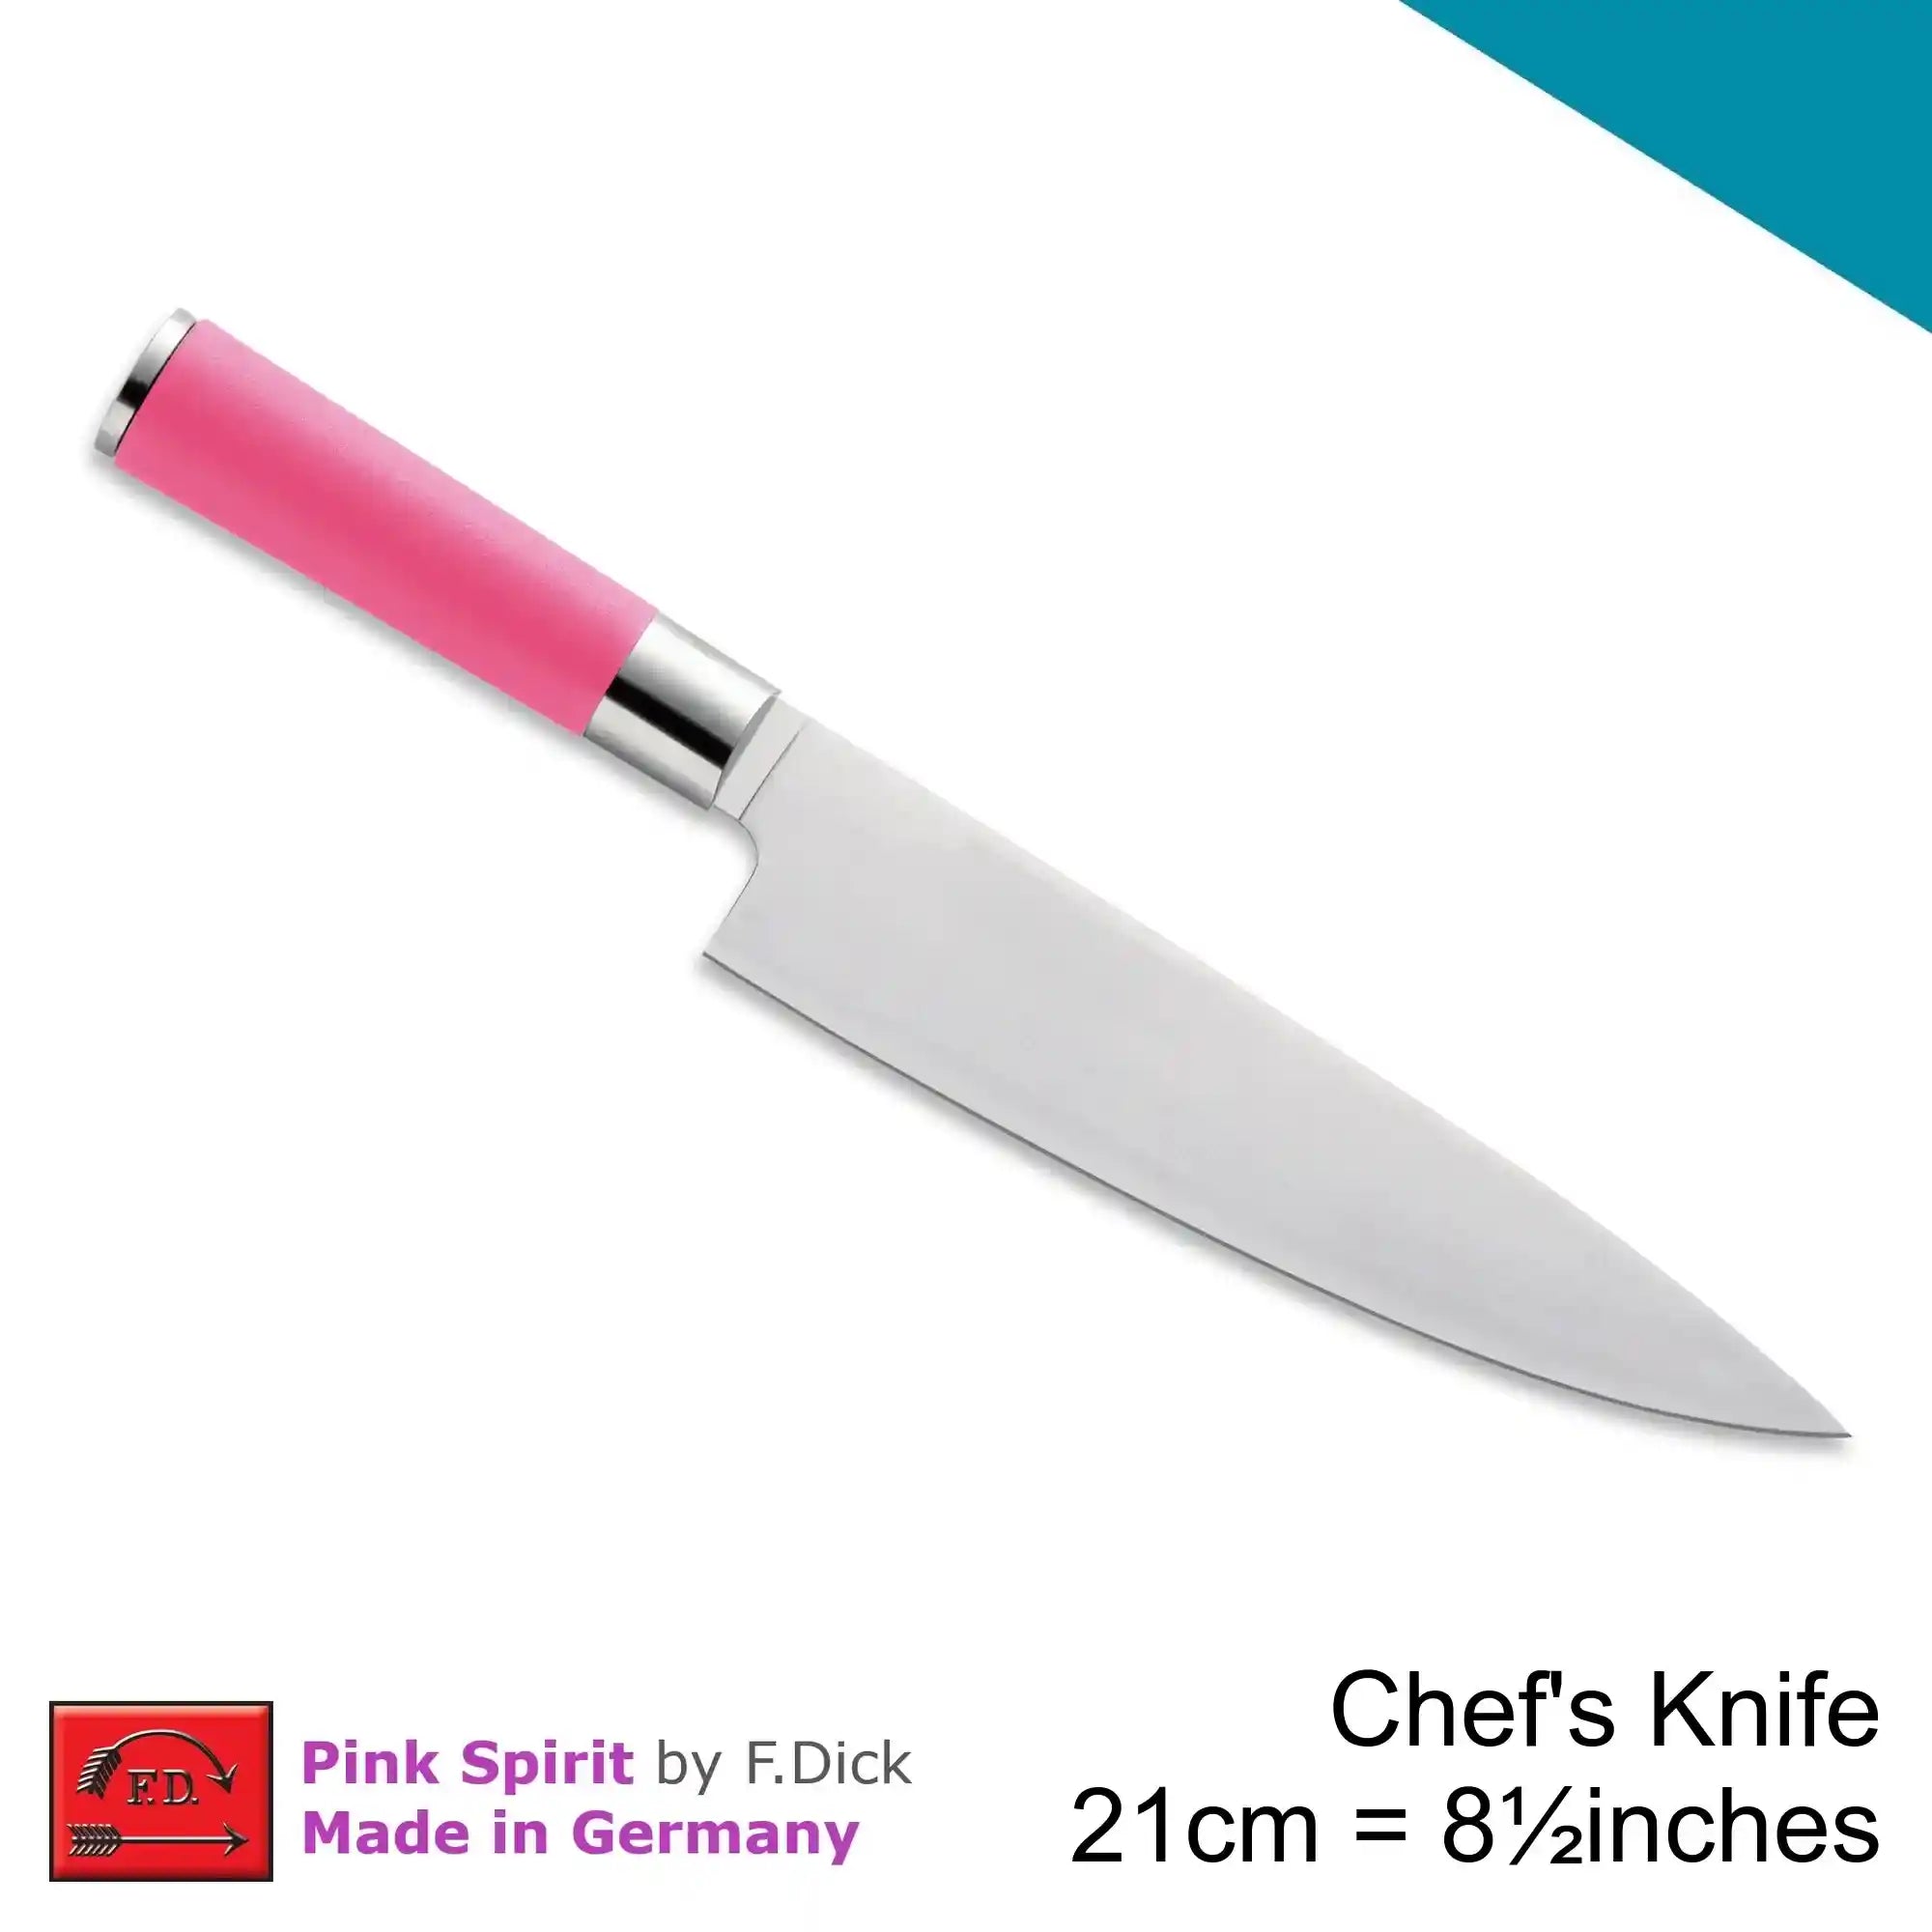 F.Dick Pink Spirit Chef's Knife, 21cm